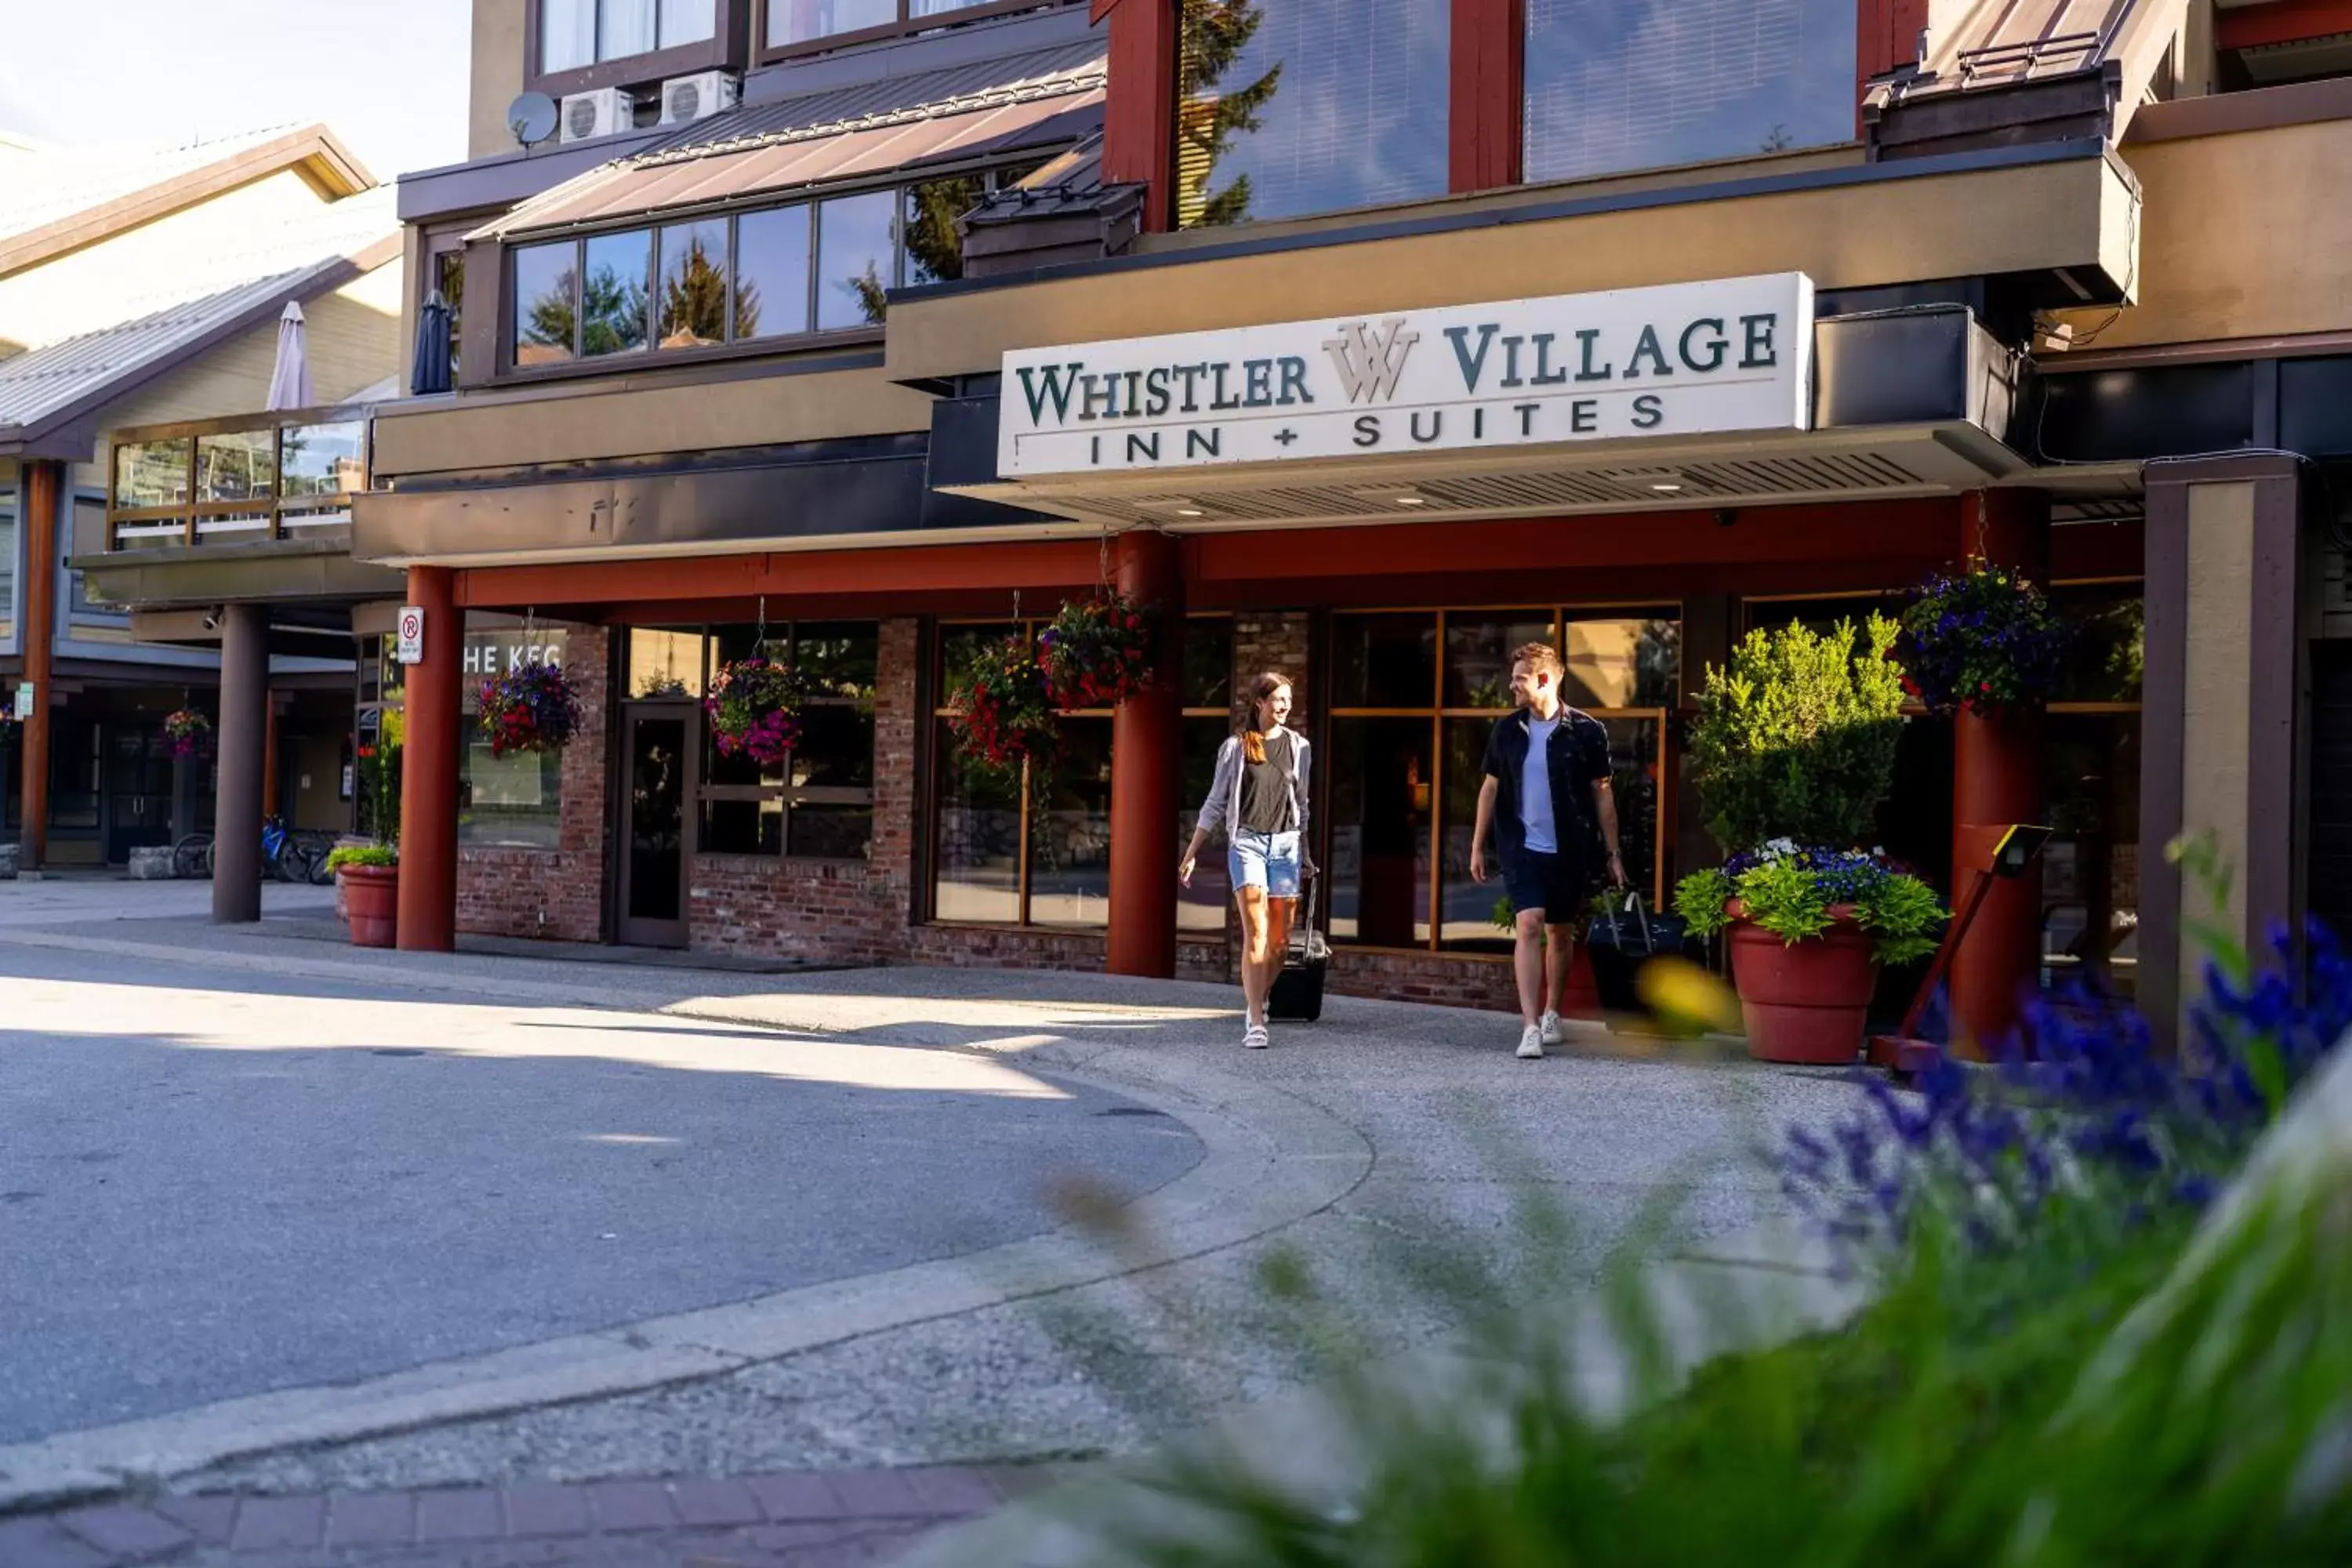 Property building in Whistler Village Inn & Suites